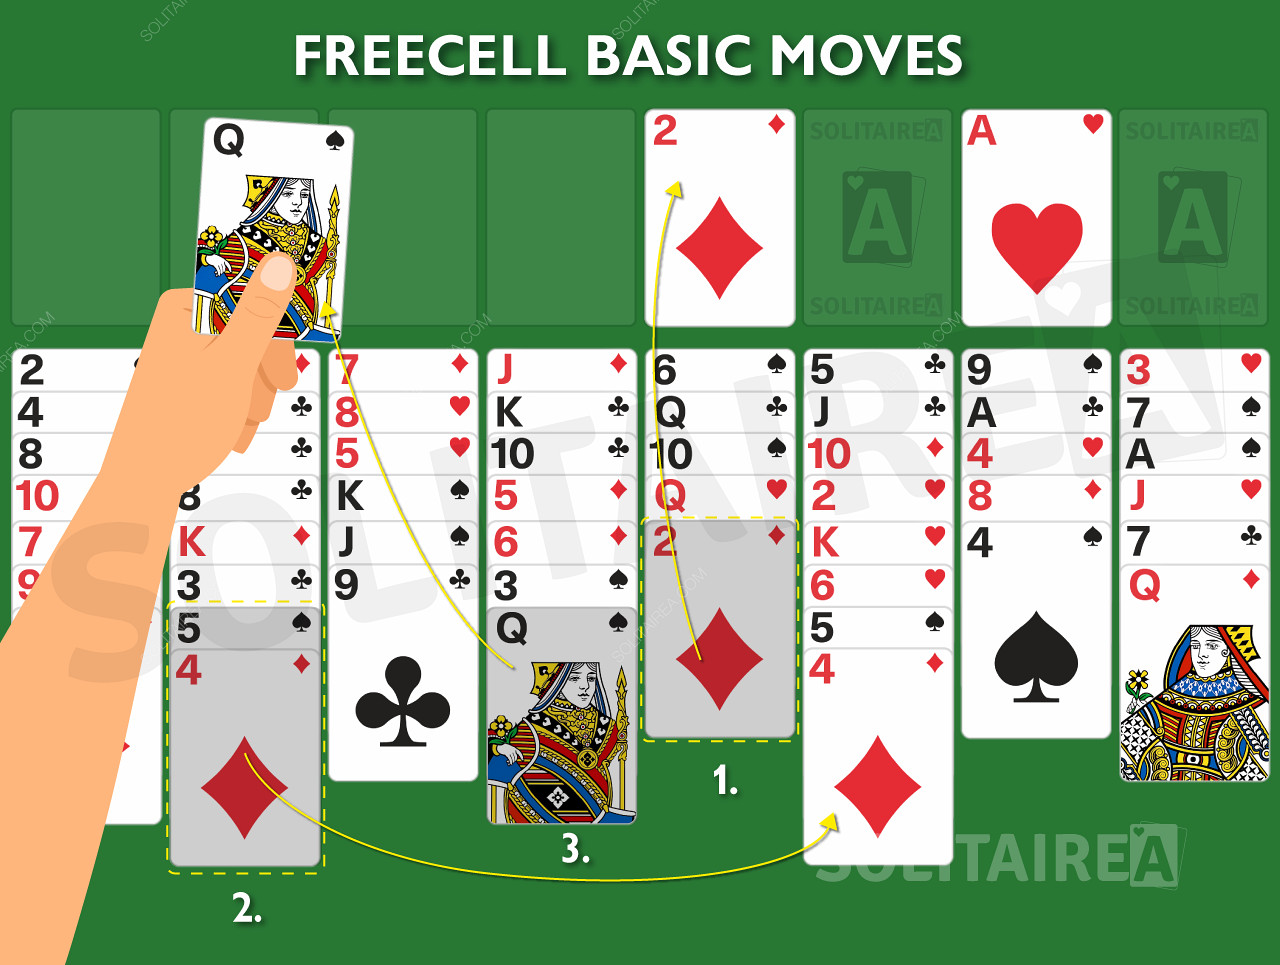 Изображение на играта, показващо основните правила в действие